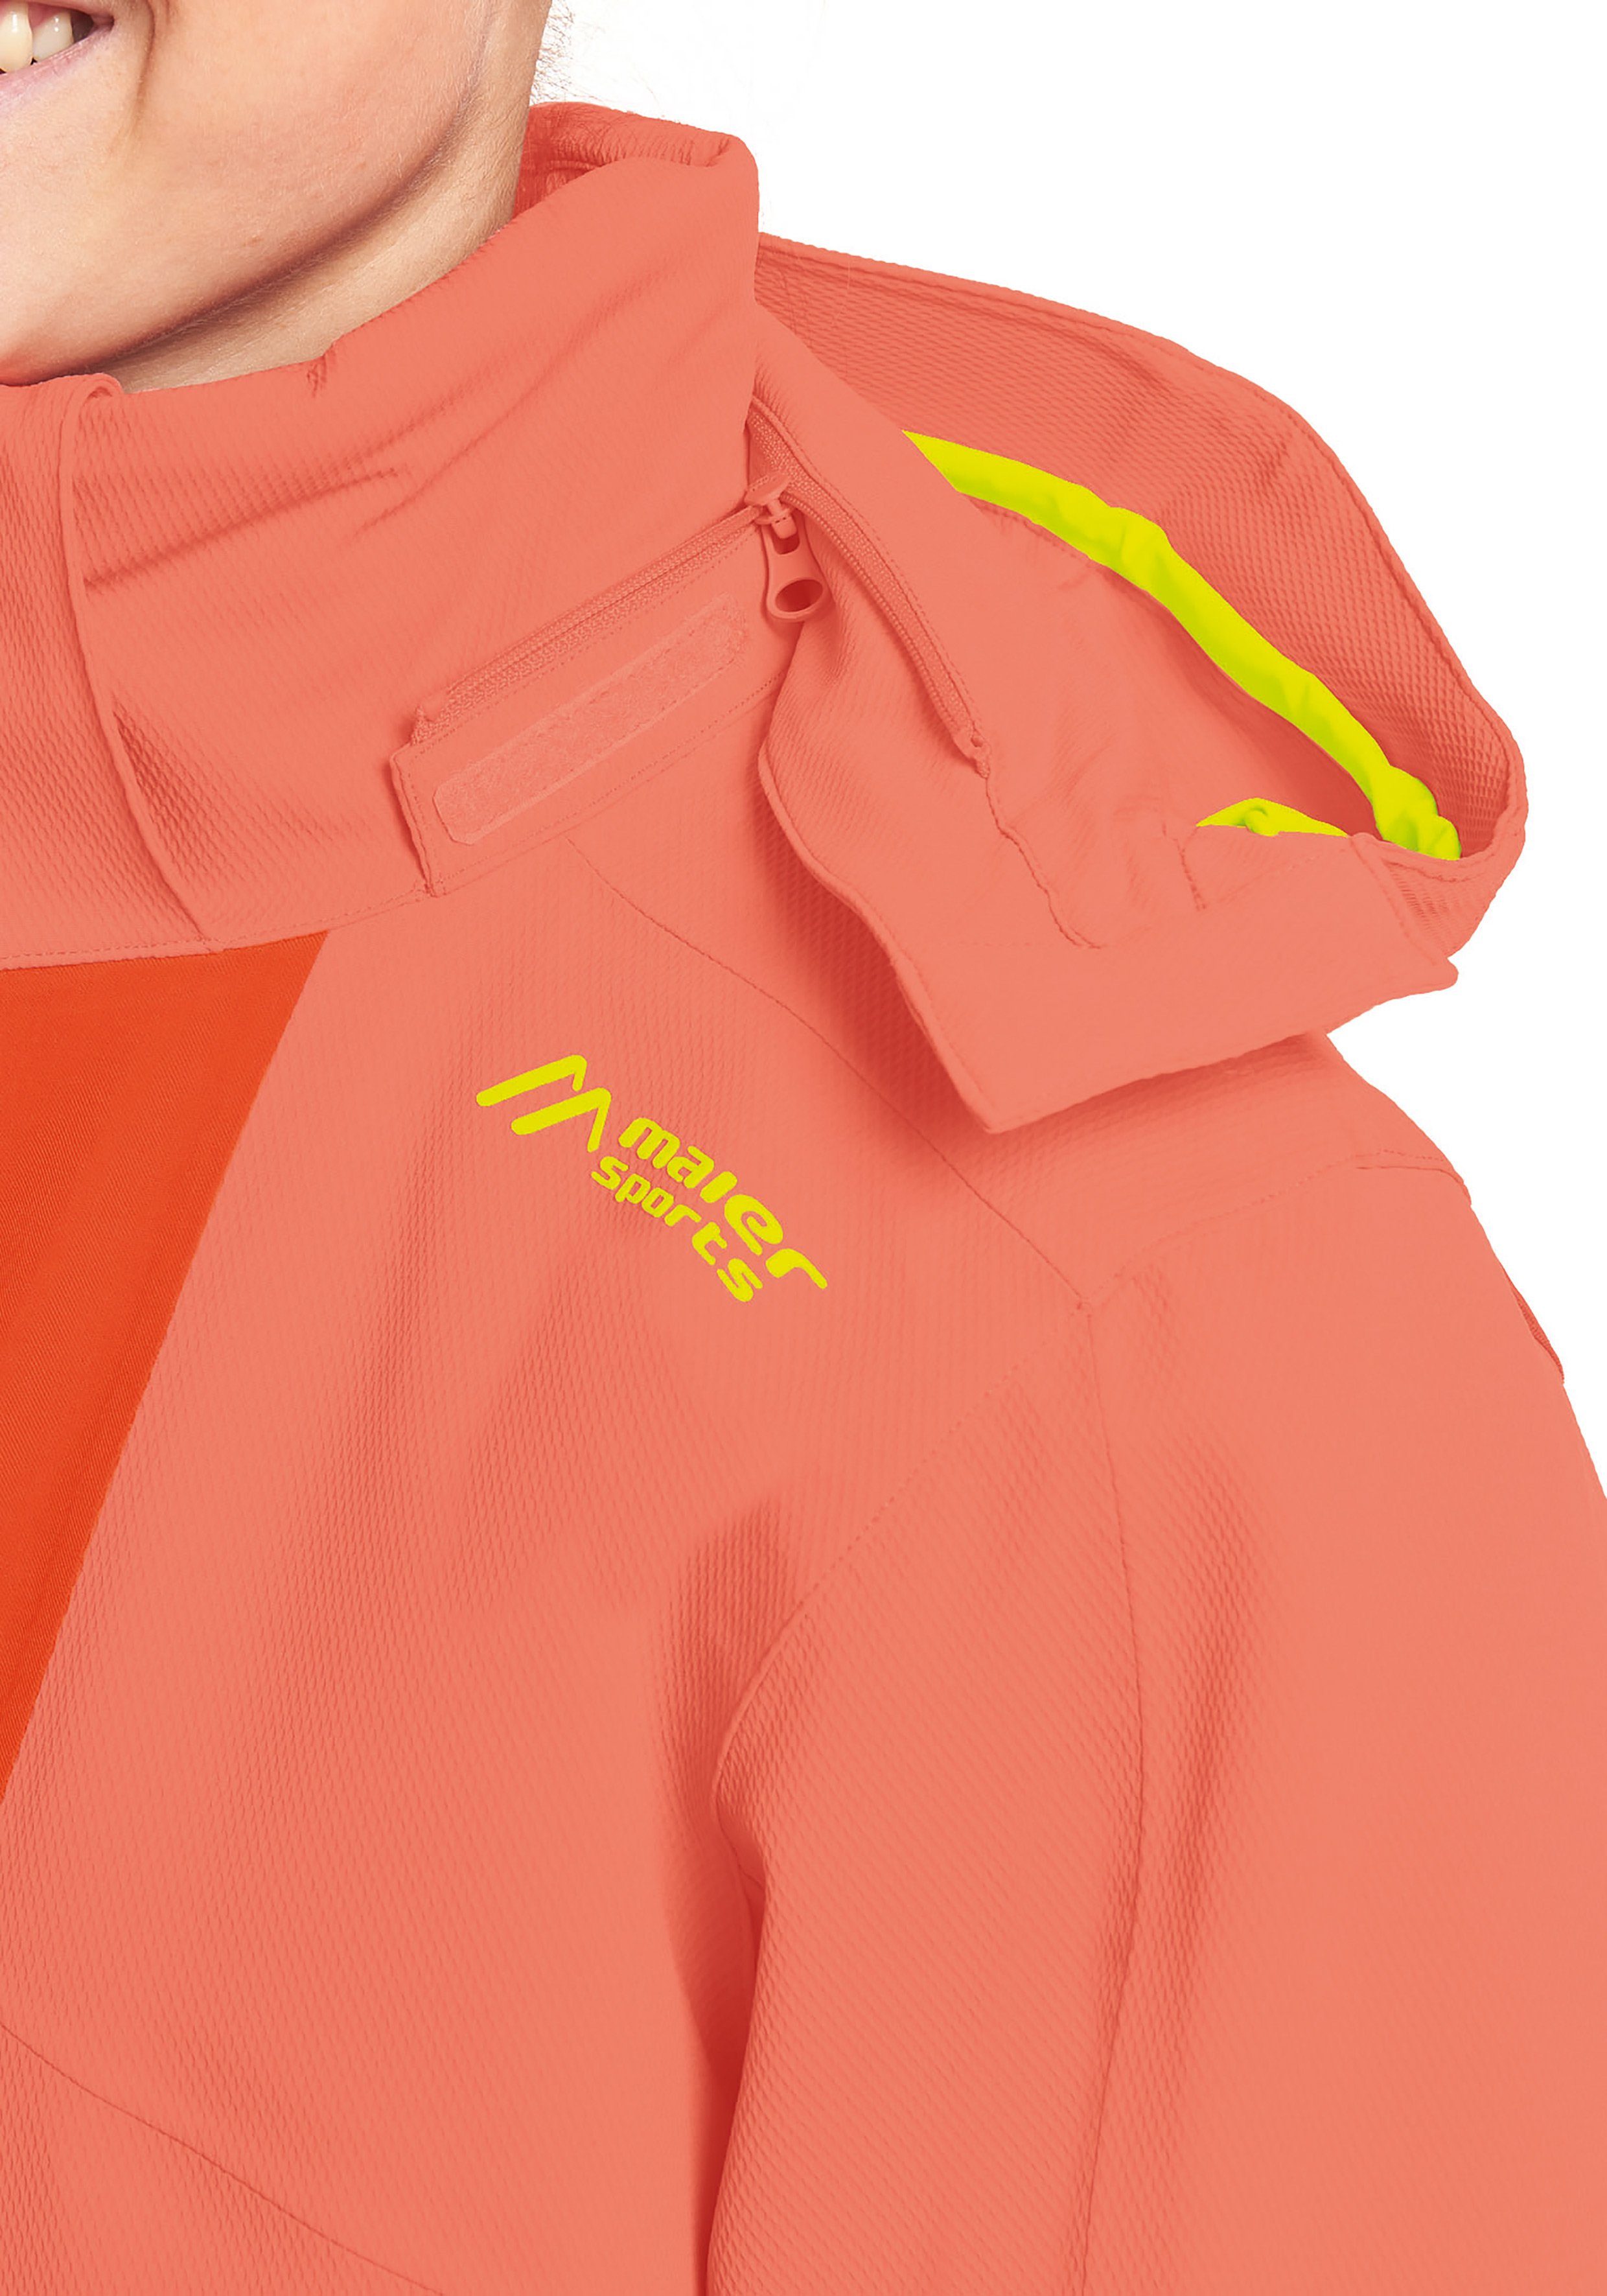 Maier Piste Sports Skijacke und perfekt W designte Modern – orangerot Impulse Freeride Fast für Skijacke